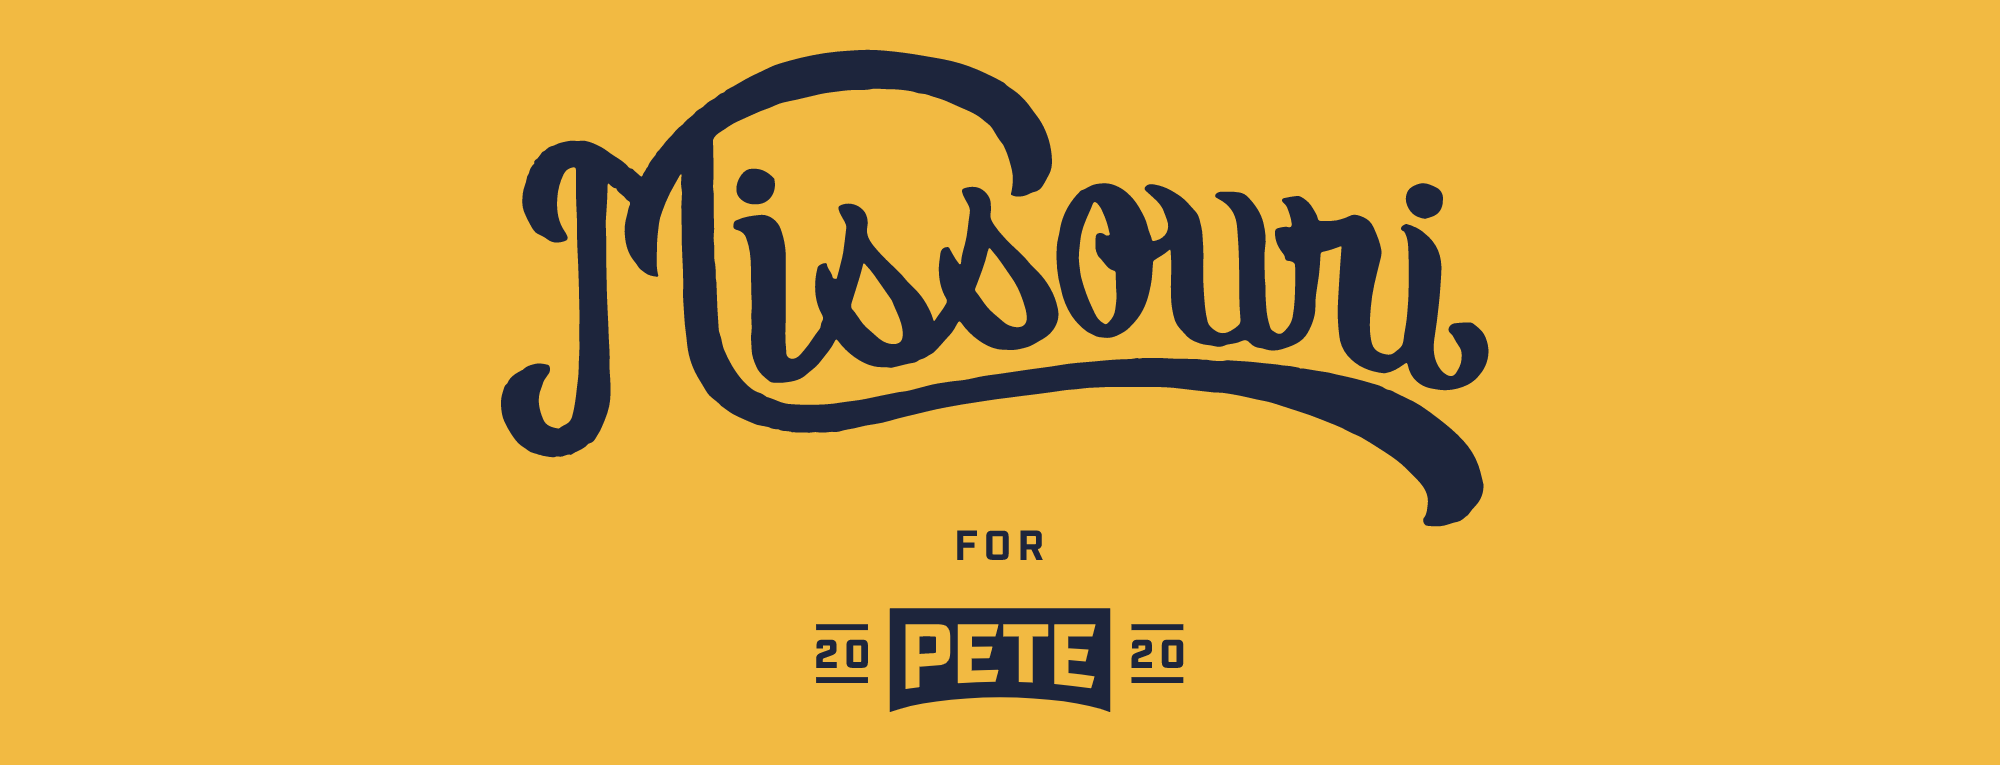 Missouri for Pete